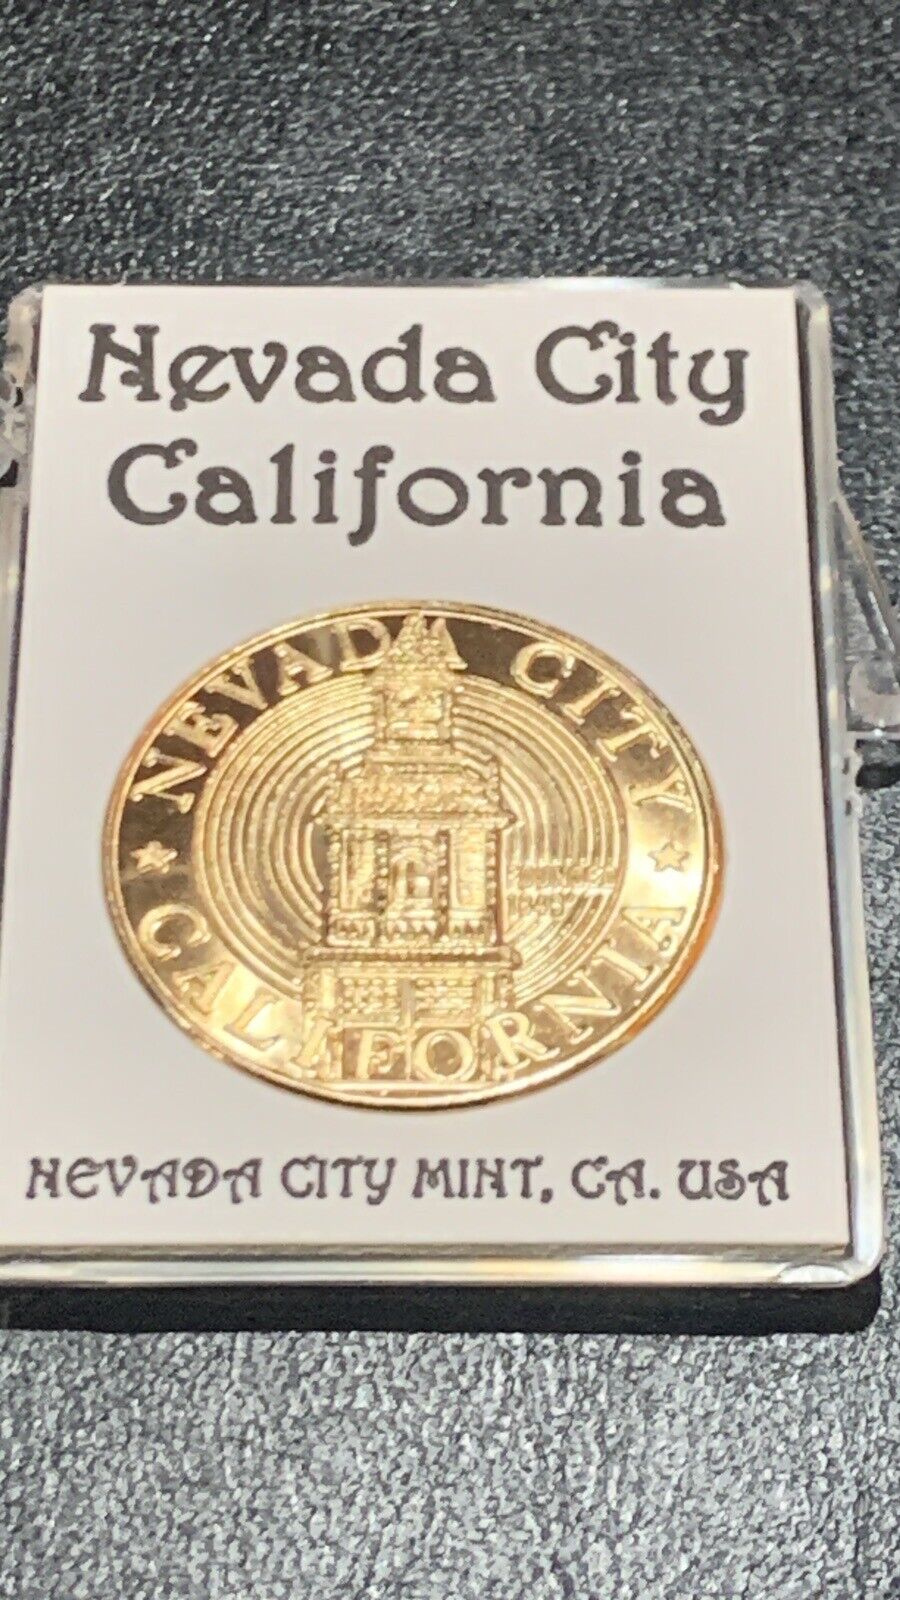 California Gold Mining Nevada City California, Nevada City Mint Coin Collection